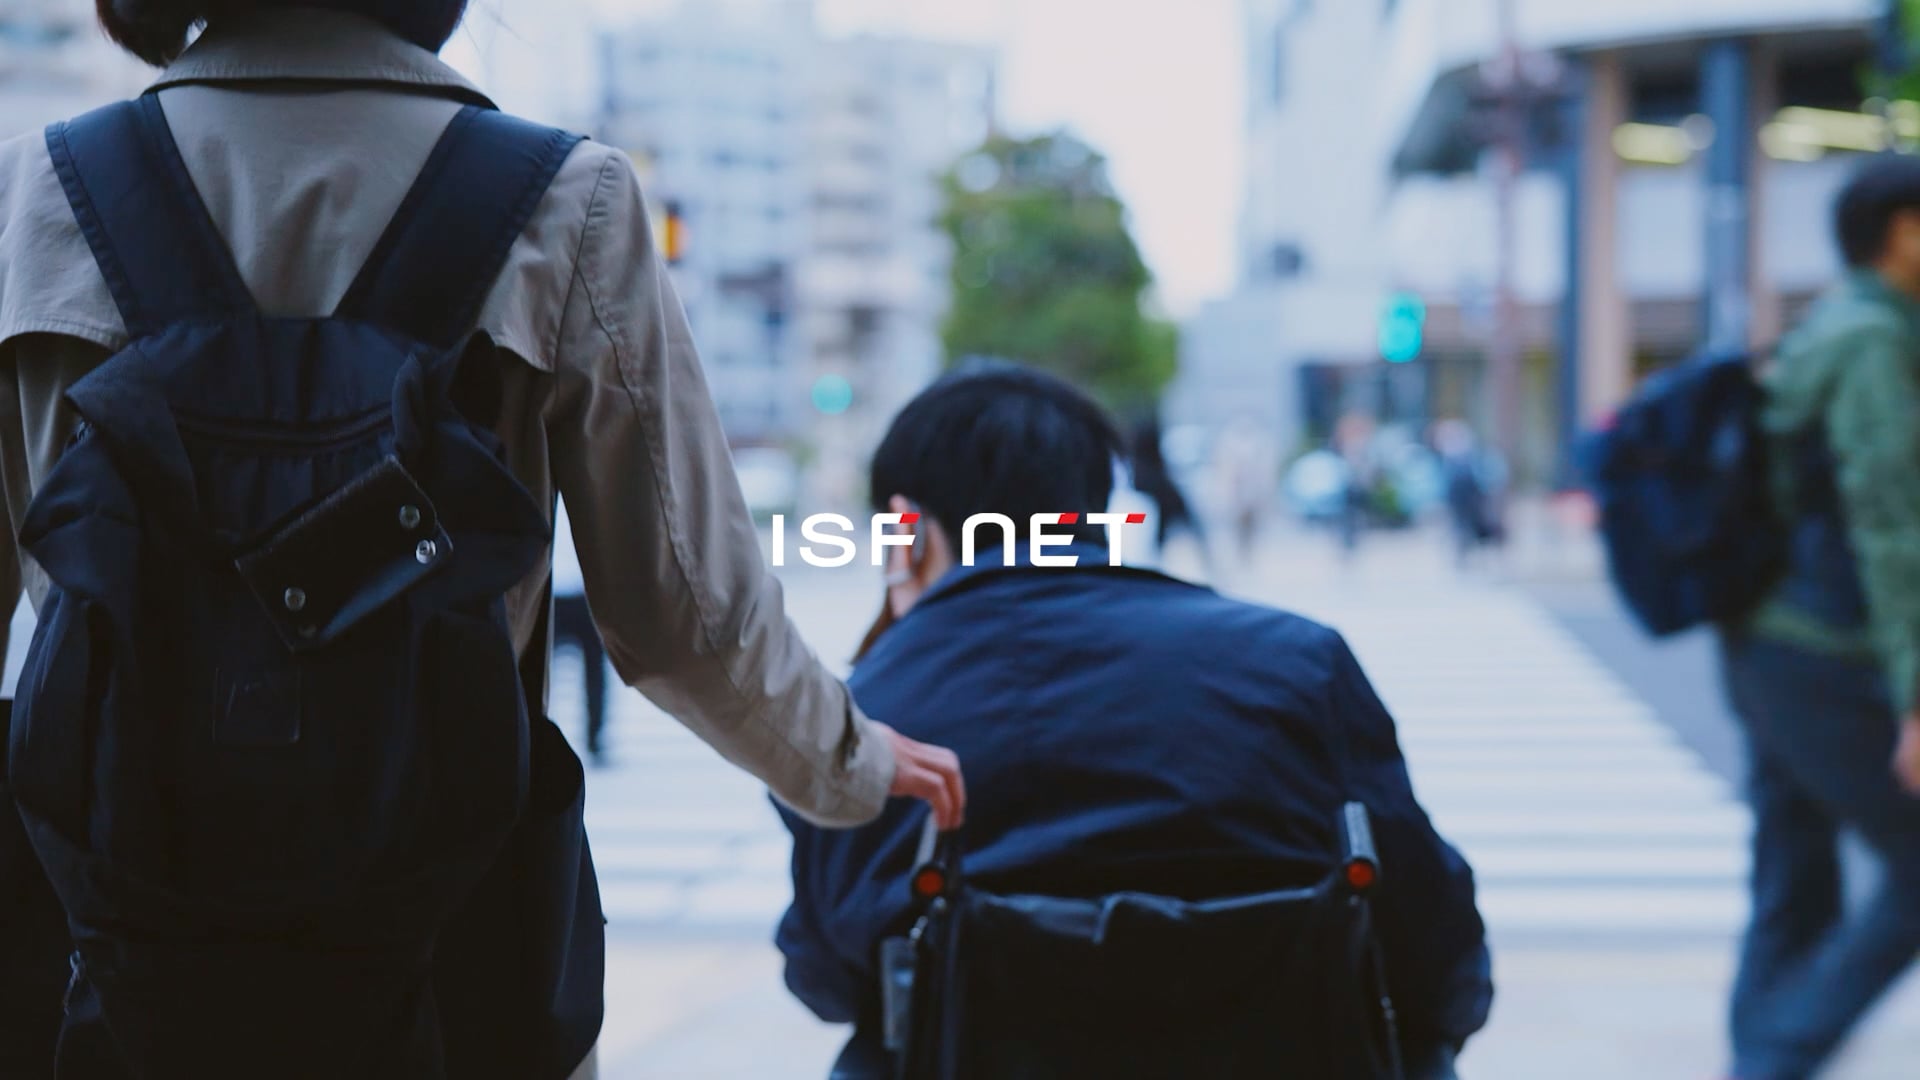 ISF NET BrandMovie